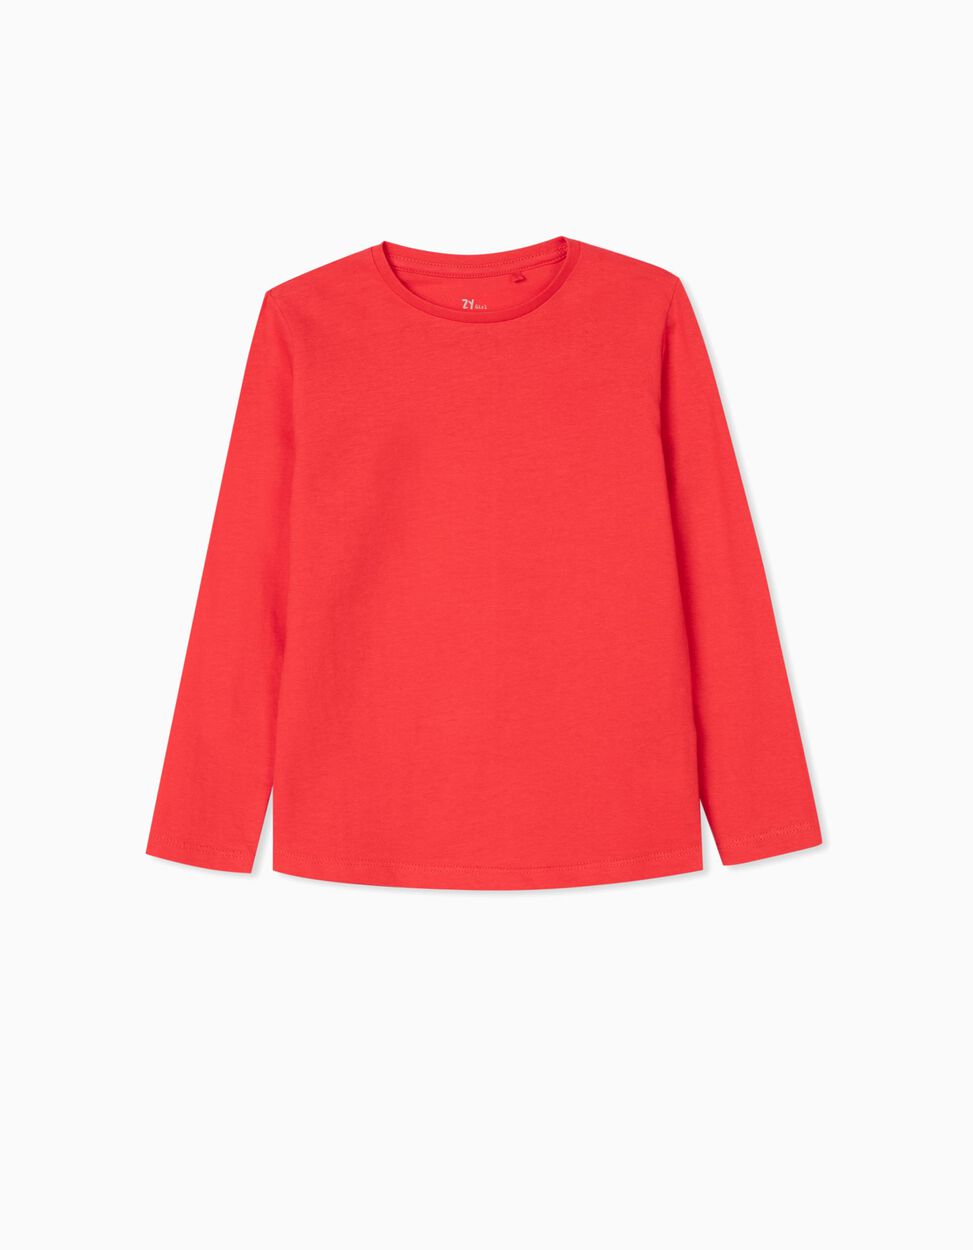 Camiseta roja – Niña – Talla 4-5 años